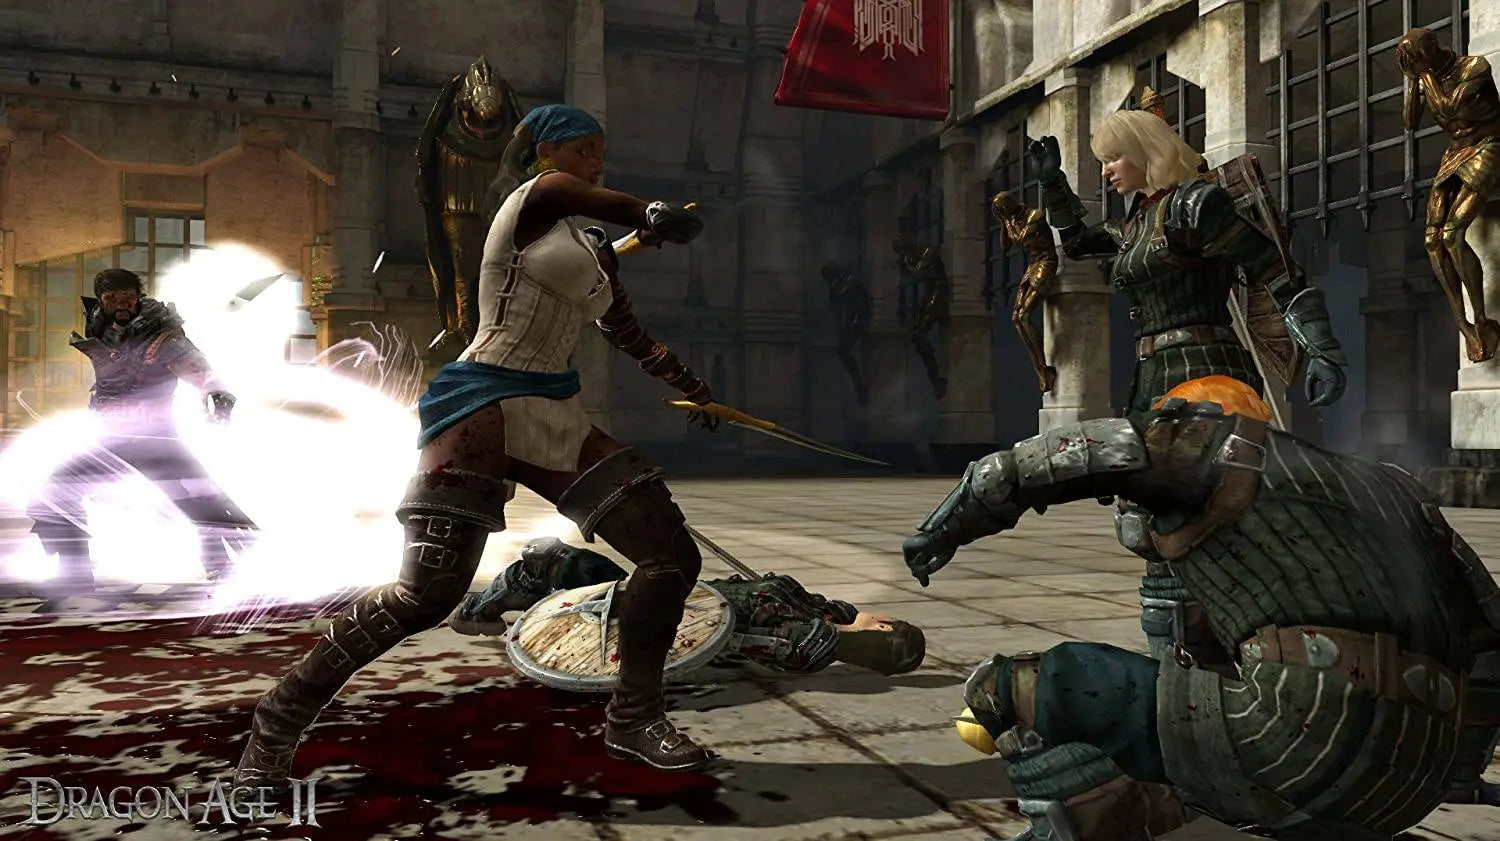 Dragon Age 2 - PlayStation 3 Standard Edition - Used King Gaming